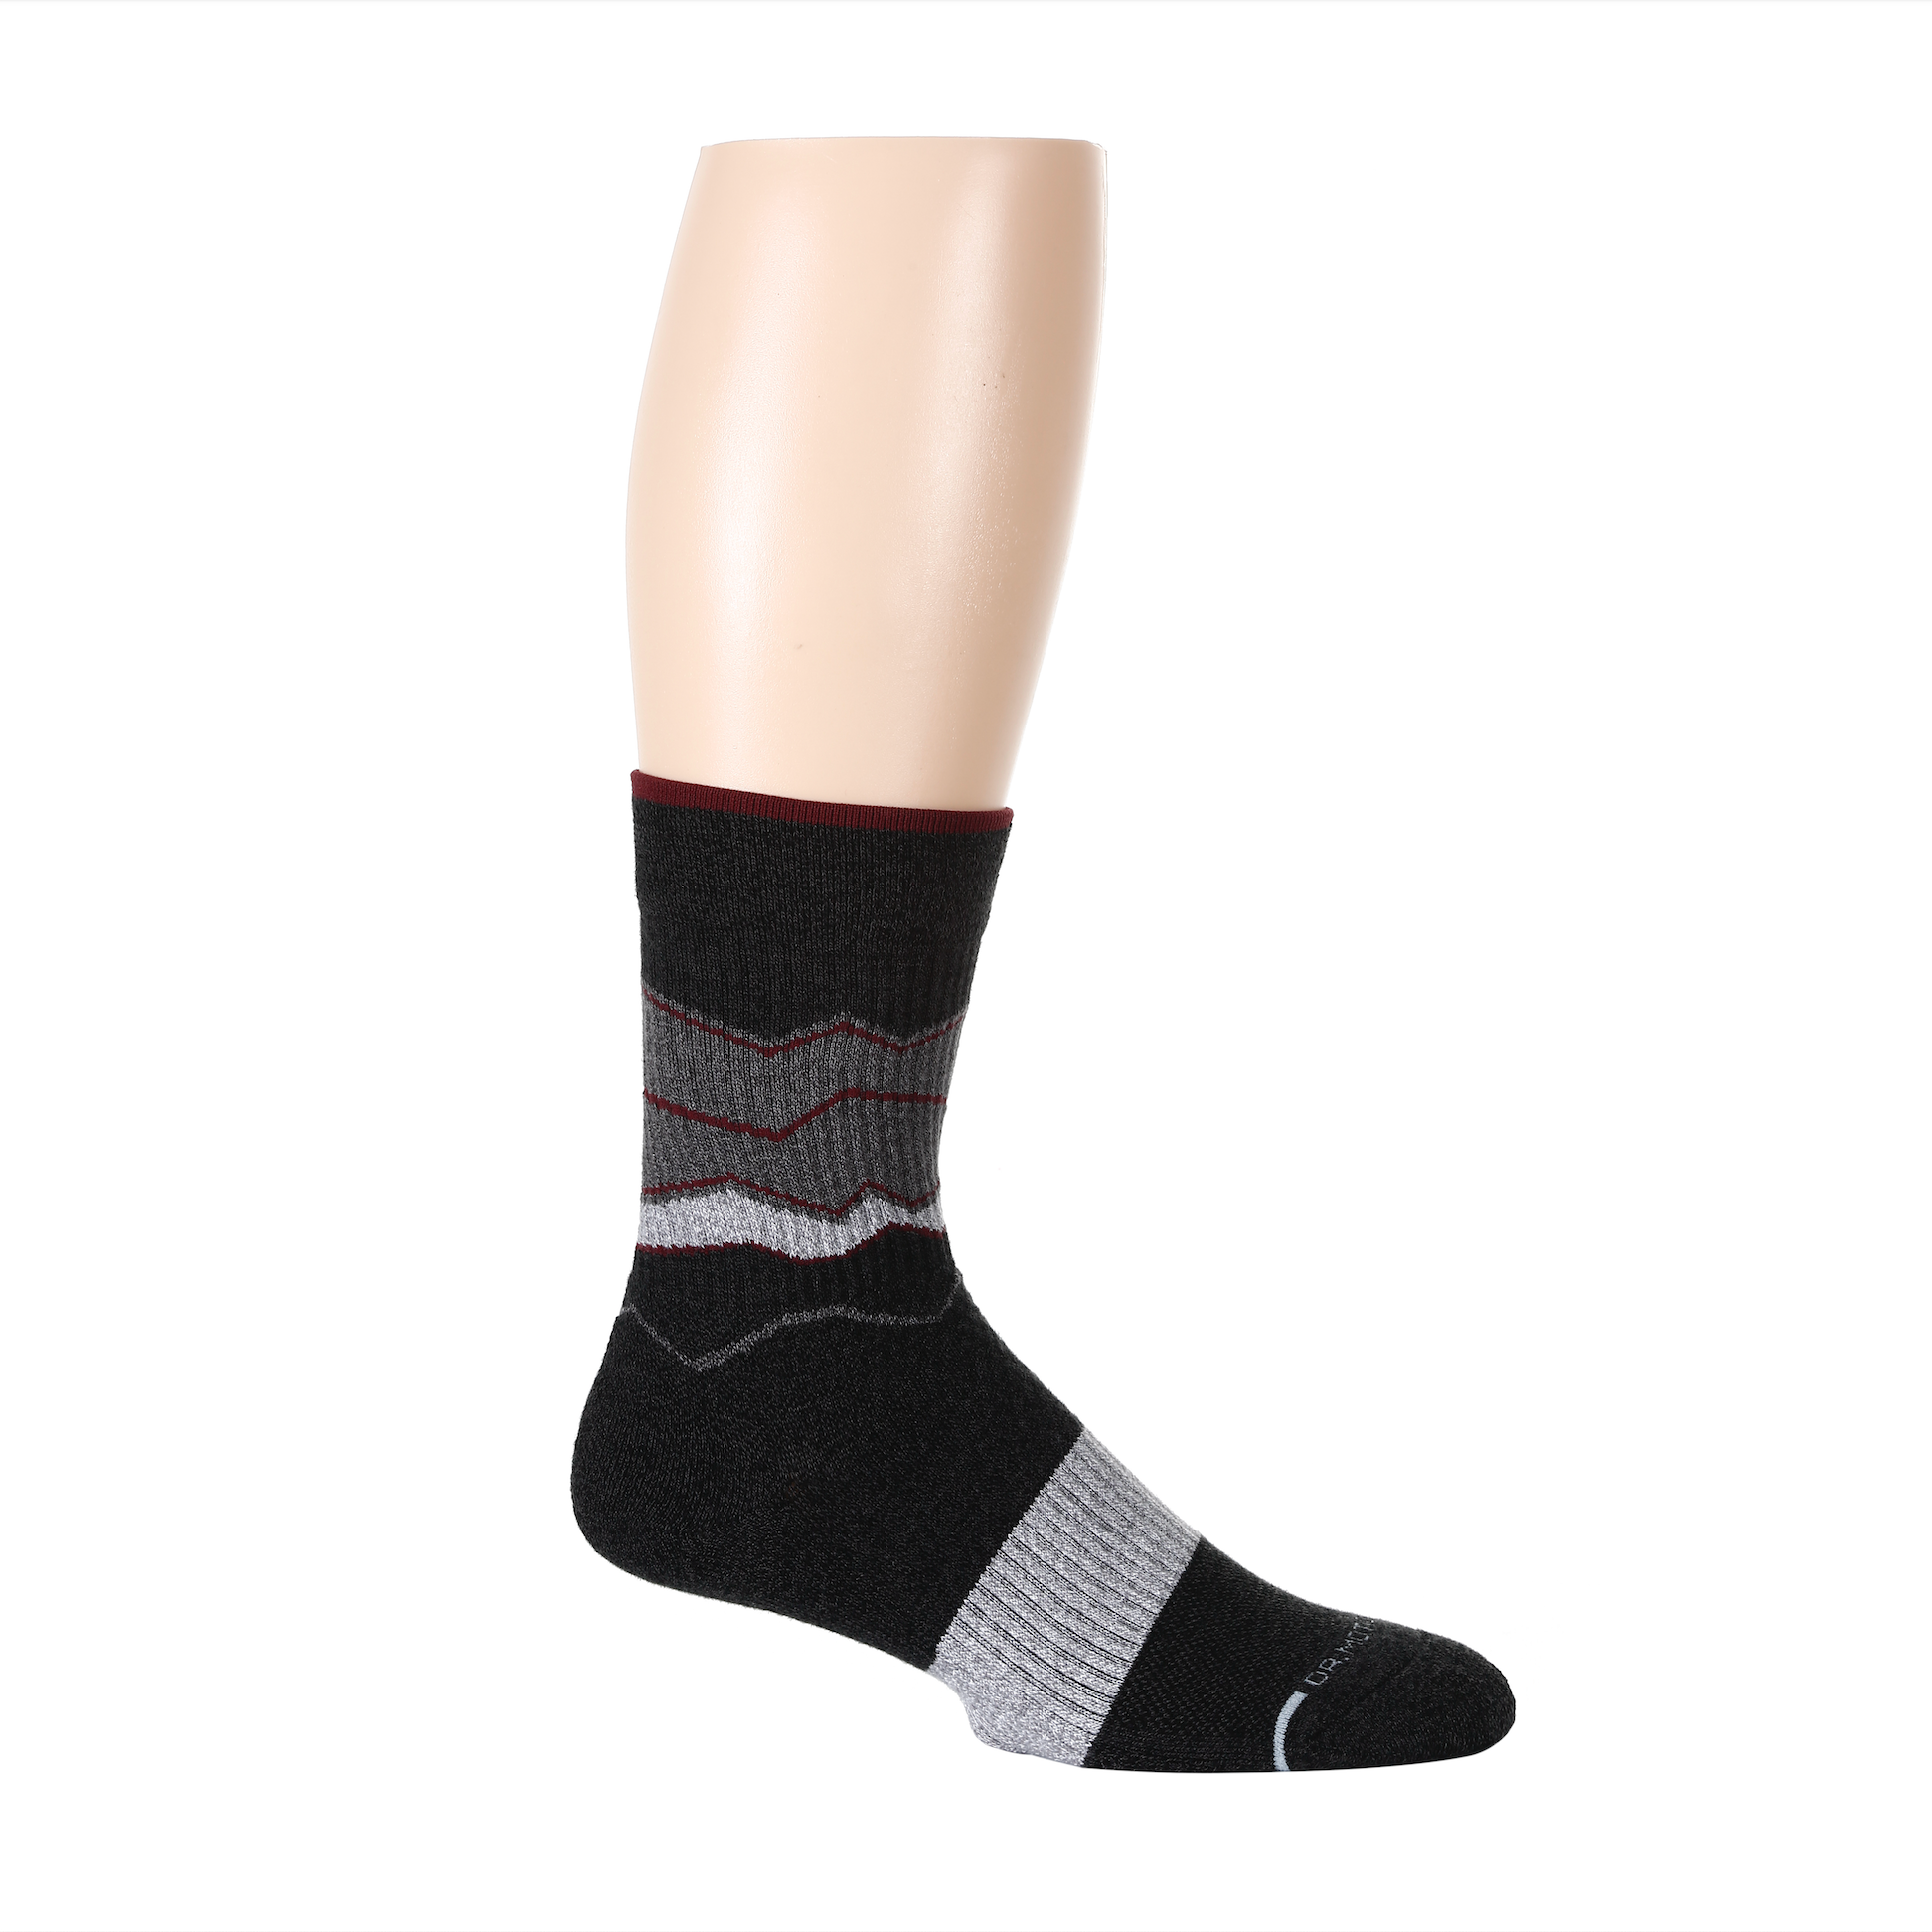 Dr. Motion Men's 2 Pack Basic Colors Everyday Compression Ankle Socks White